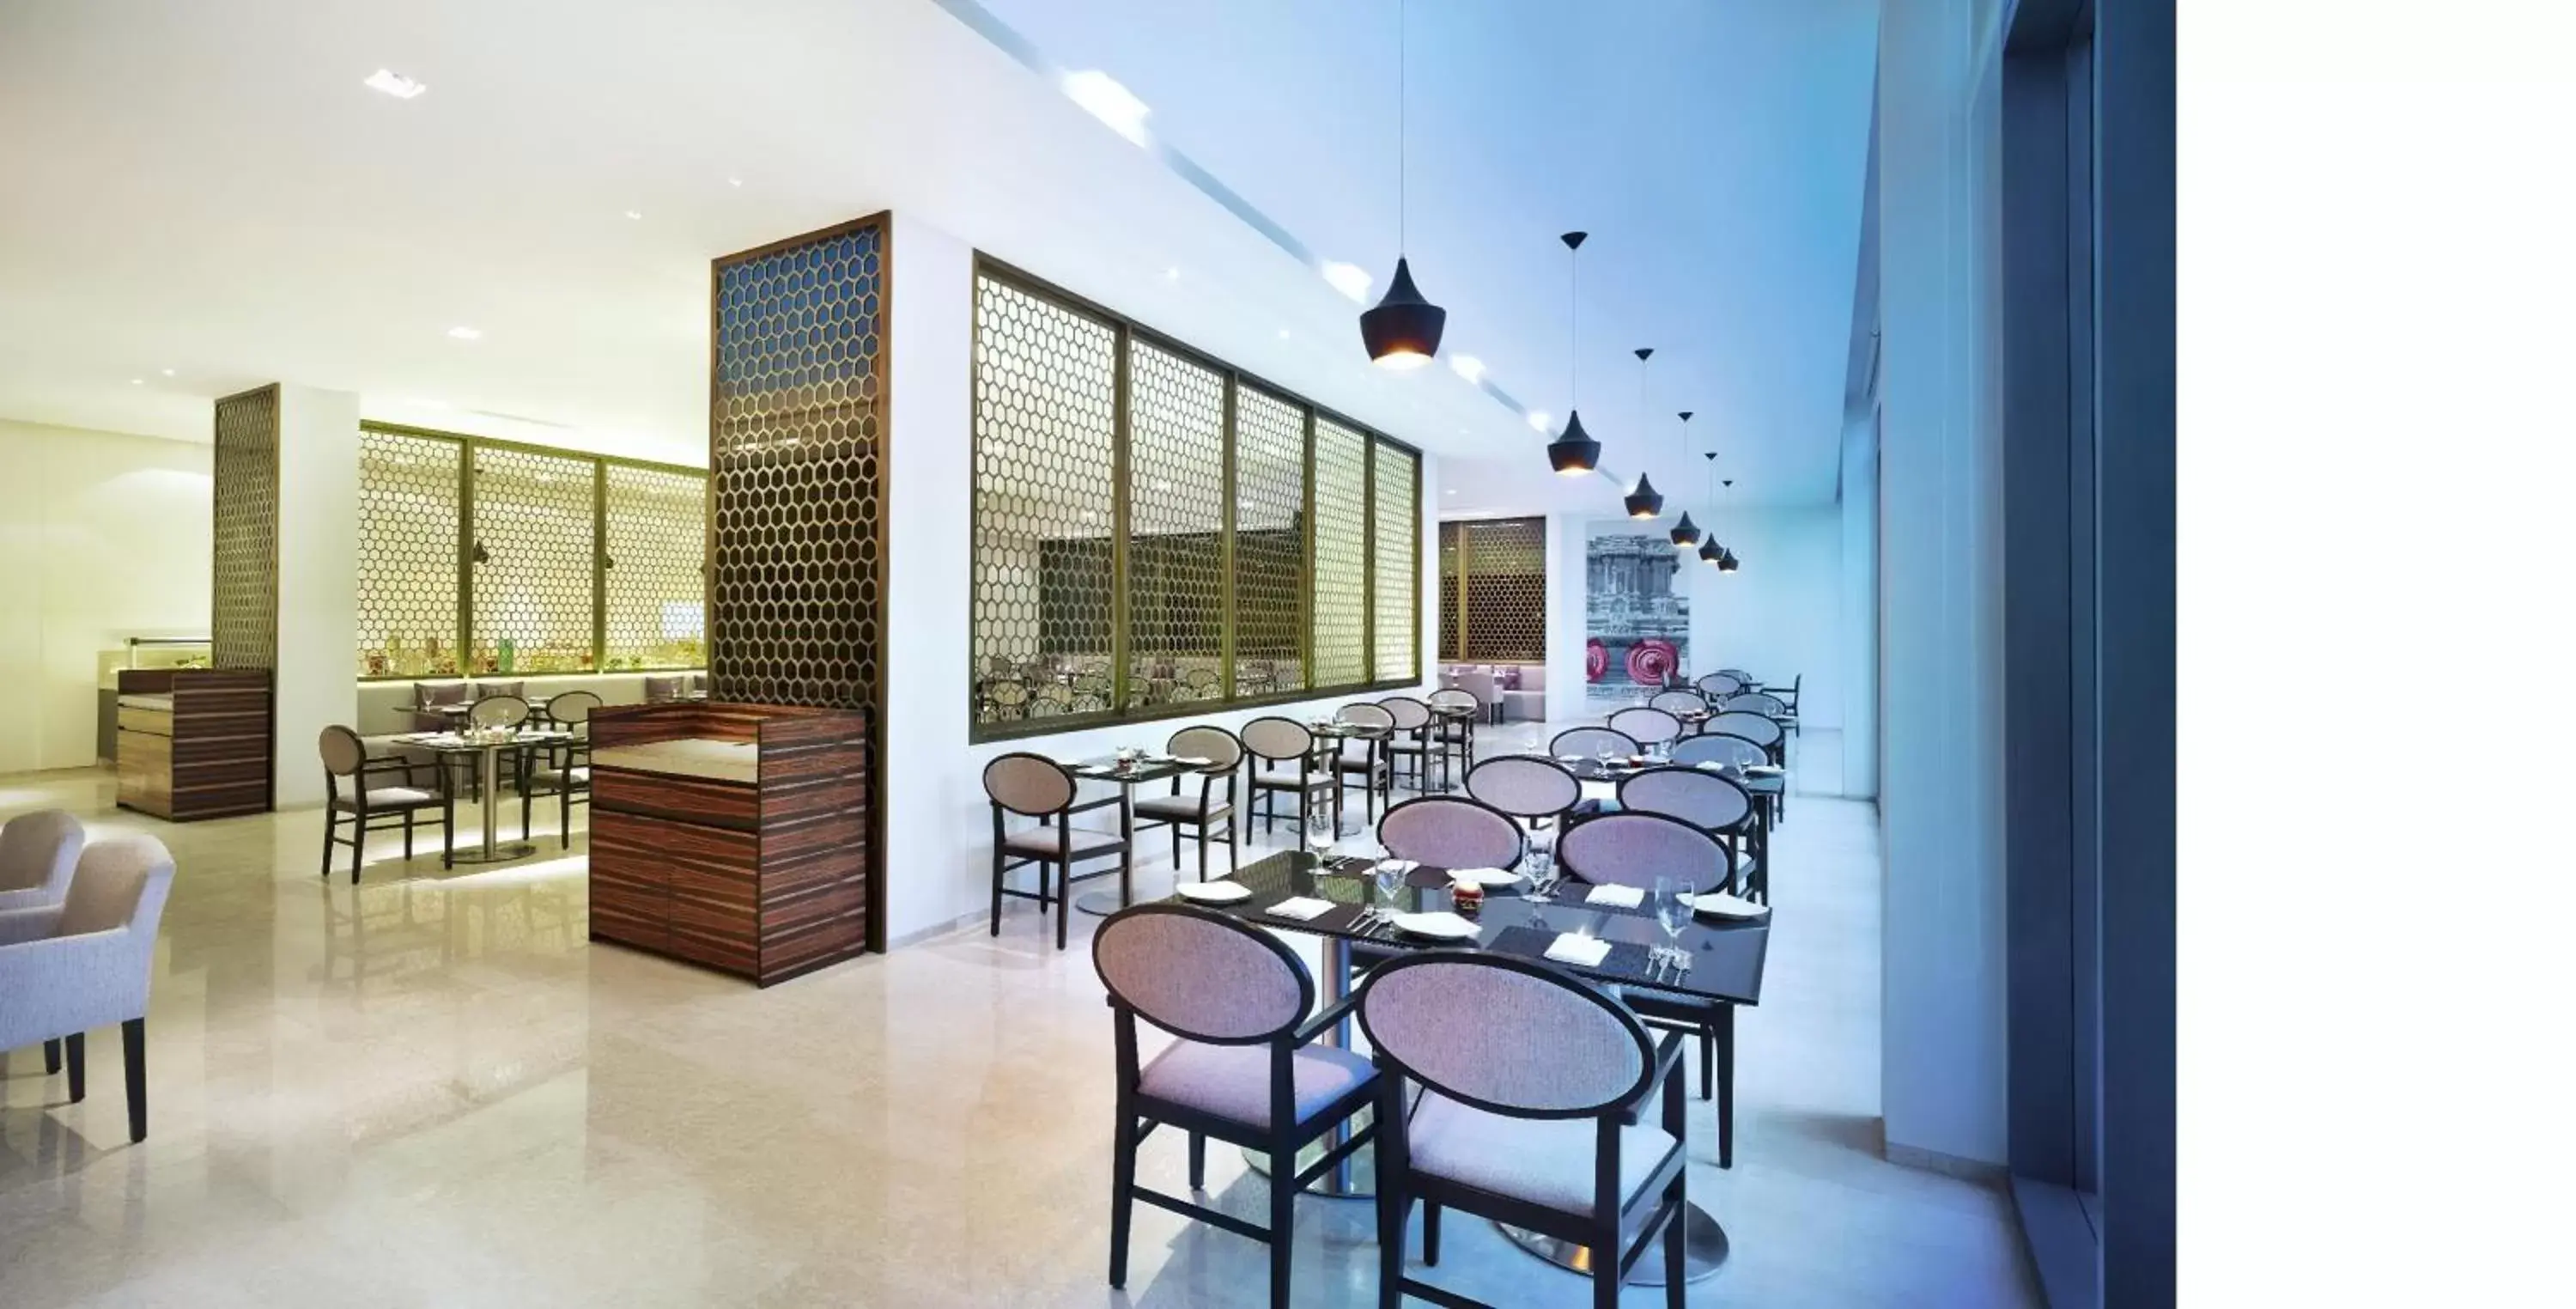 Restaurant/places to eat in Vivanta Chennai IT Expressway OMR